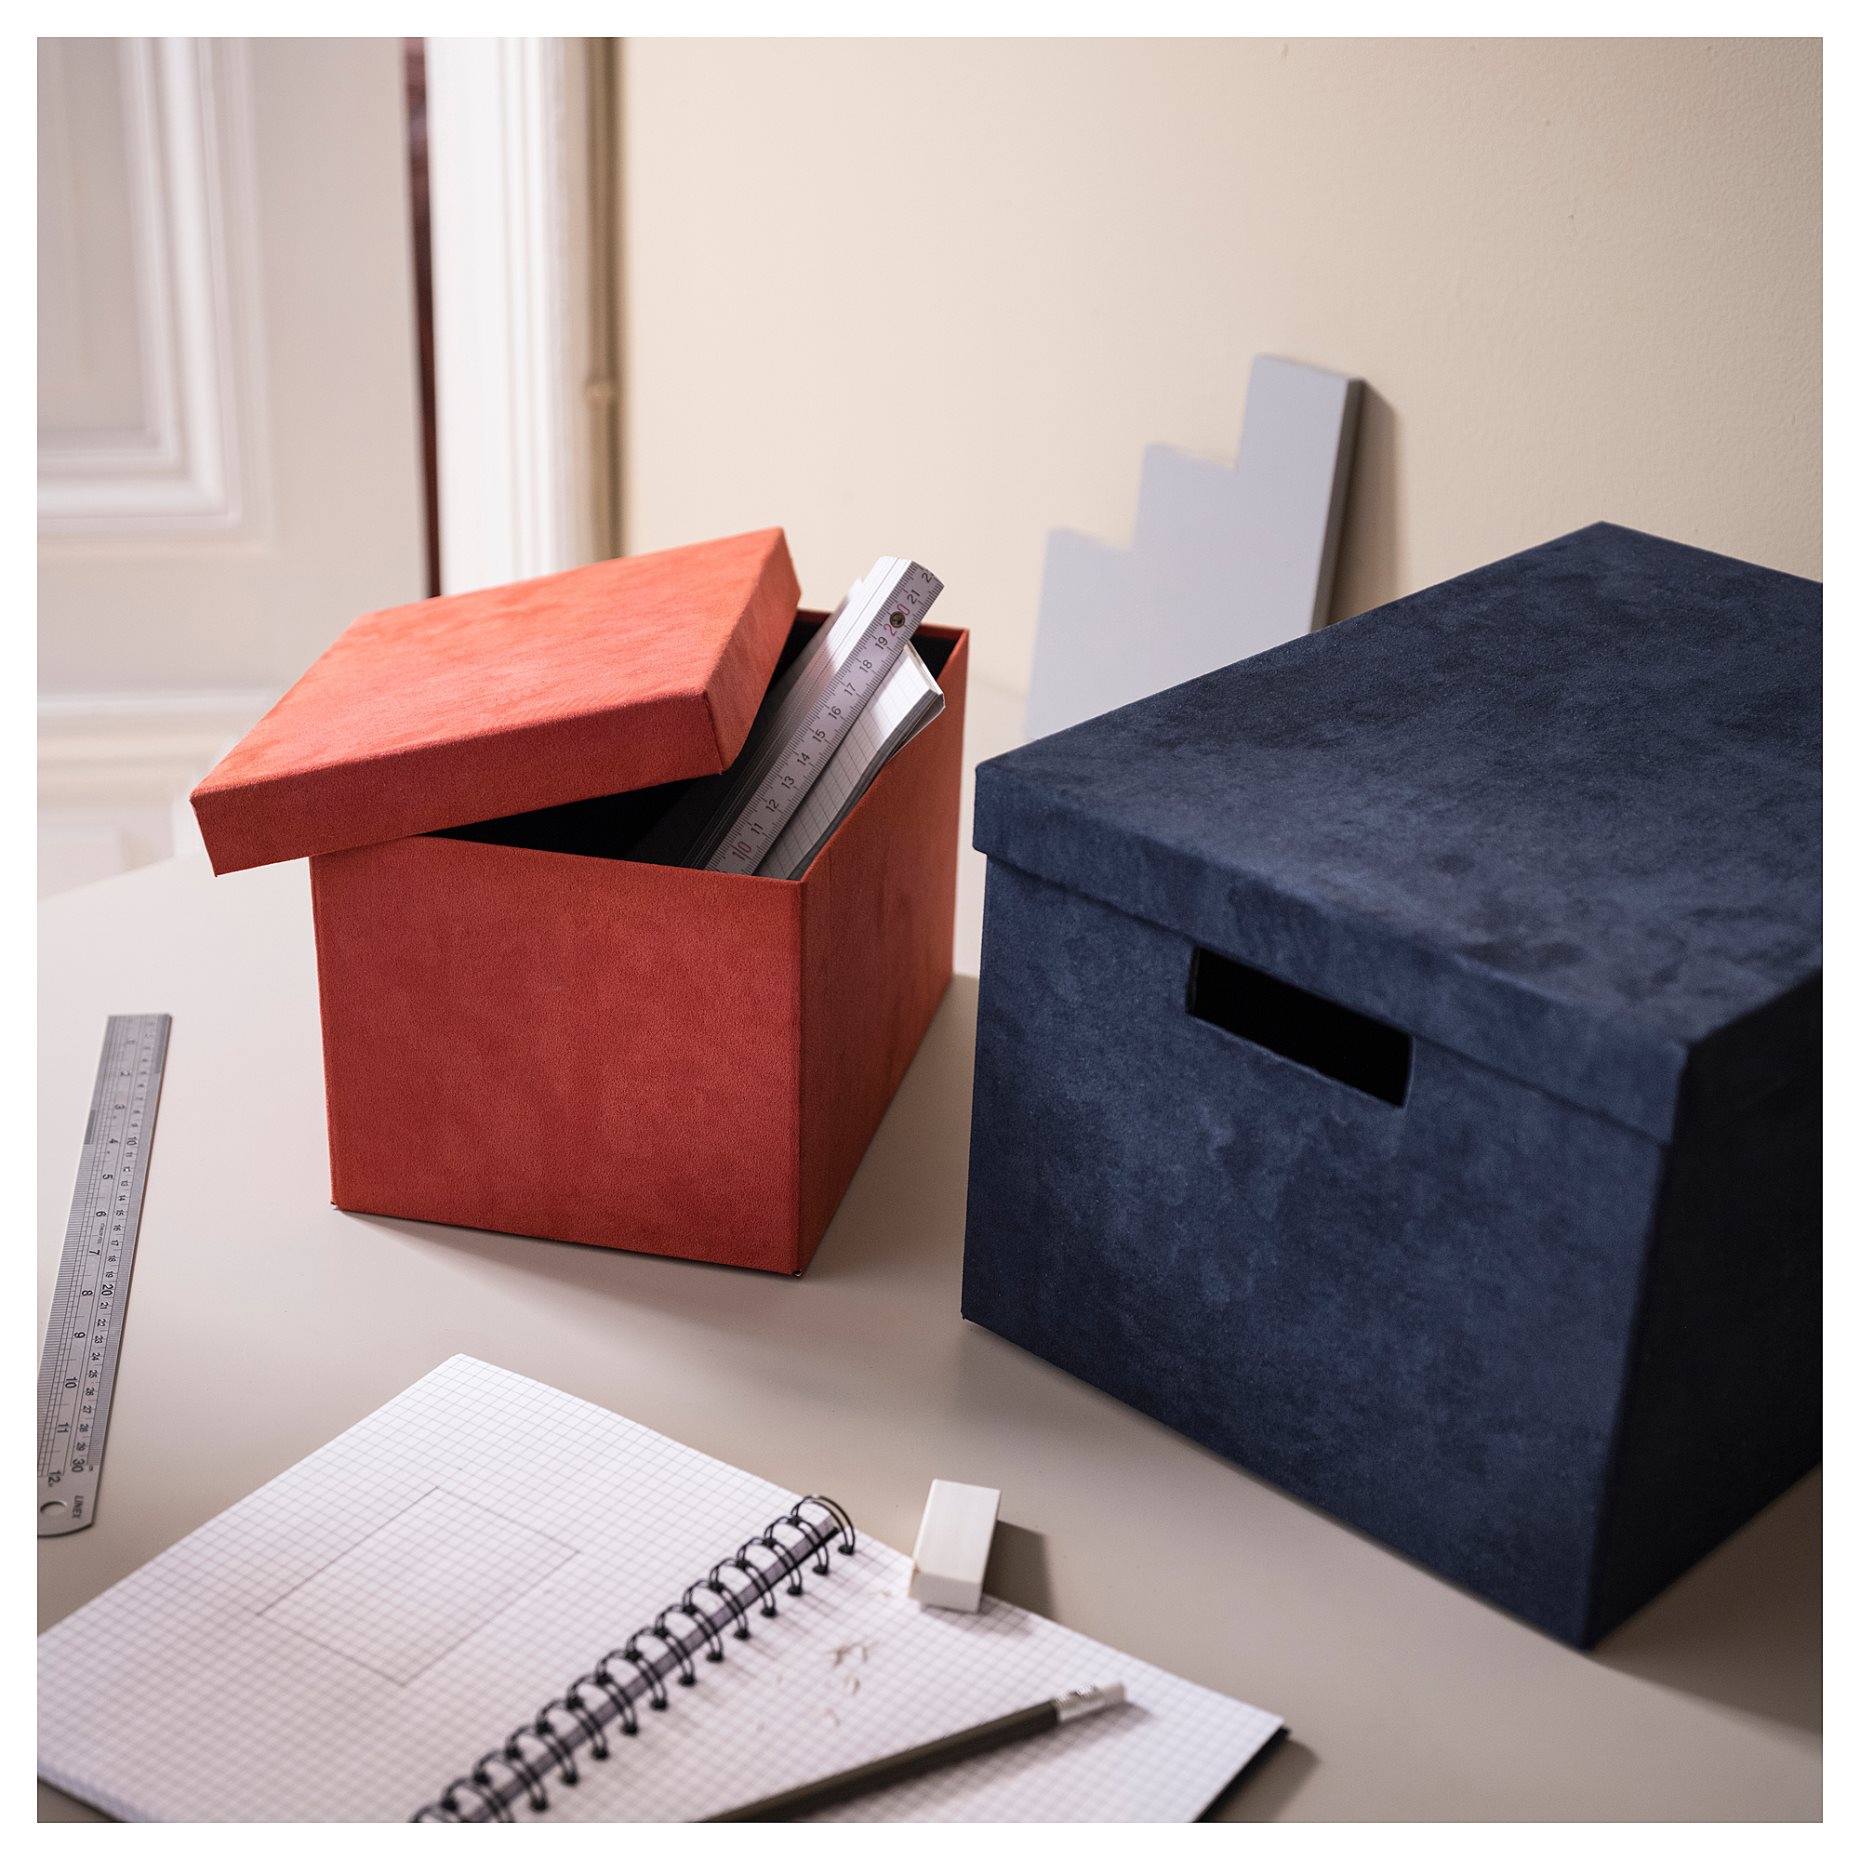 GJÄTTA, κουτί αποθήκευσης με καπάκι/βελούδο, 18x25x15 cm, 905.704.30